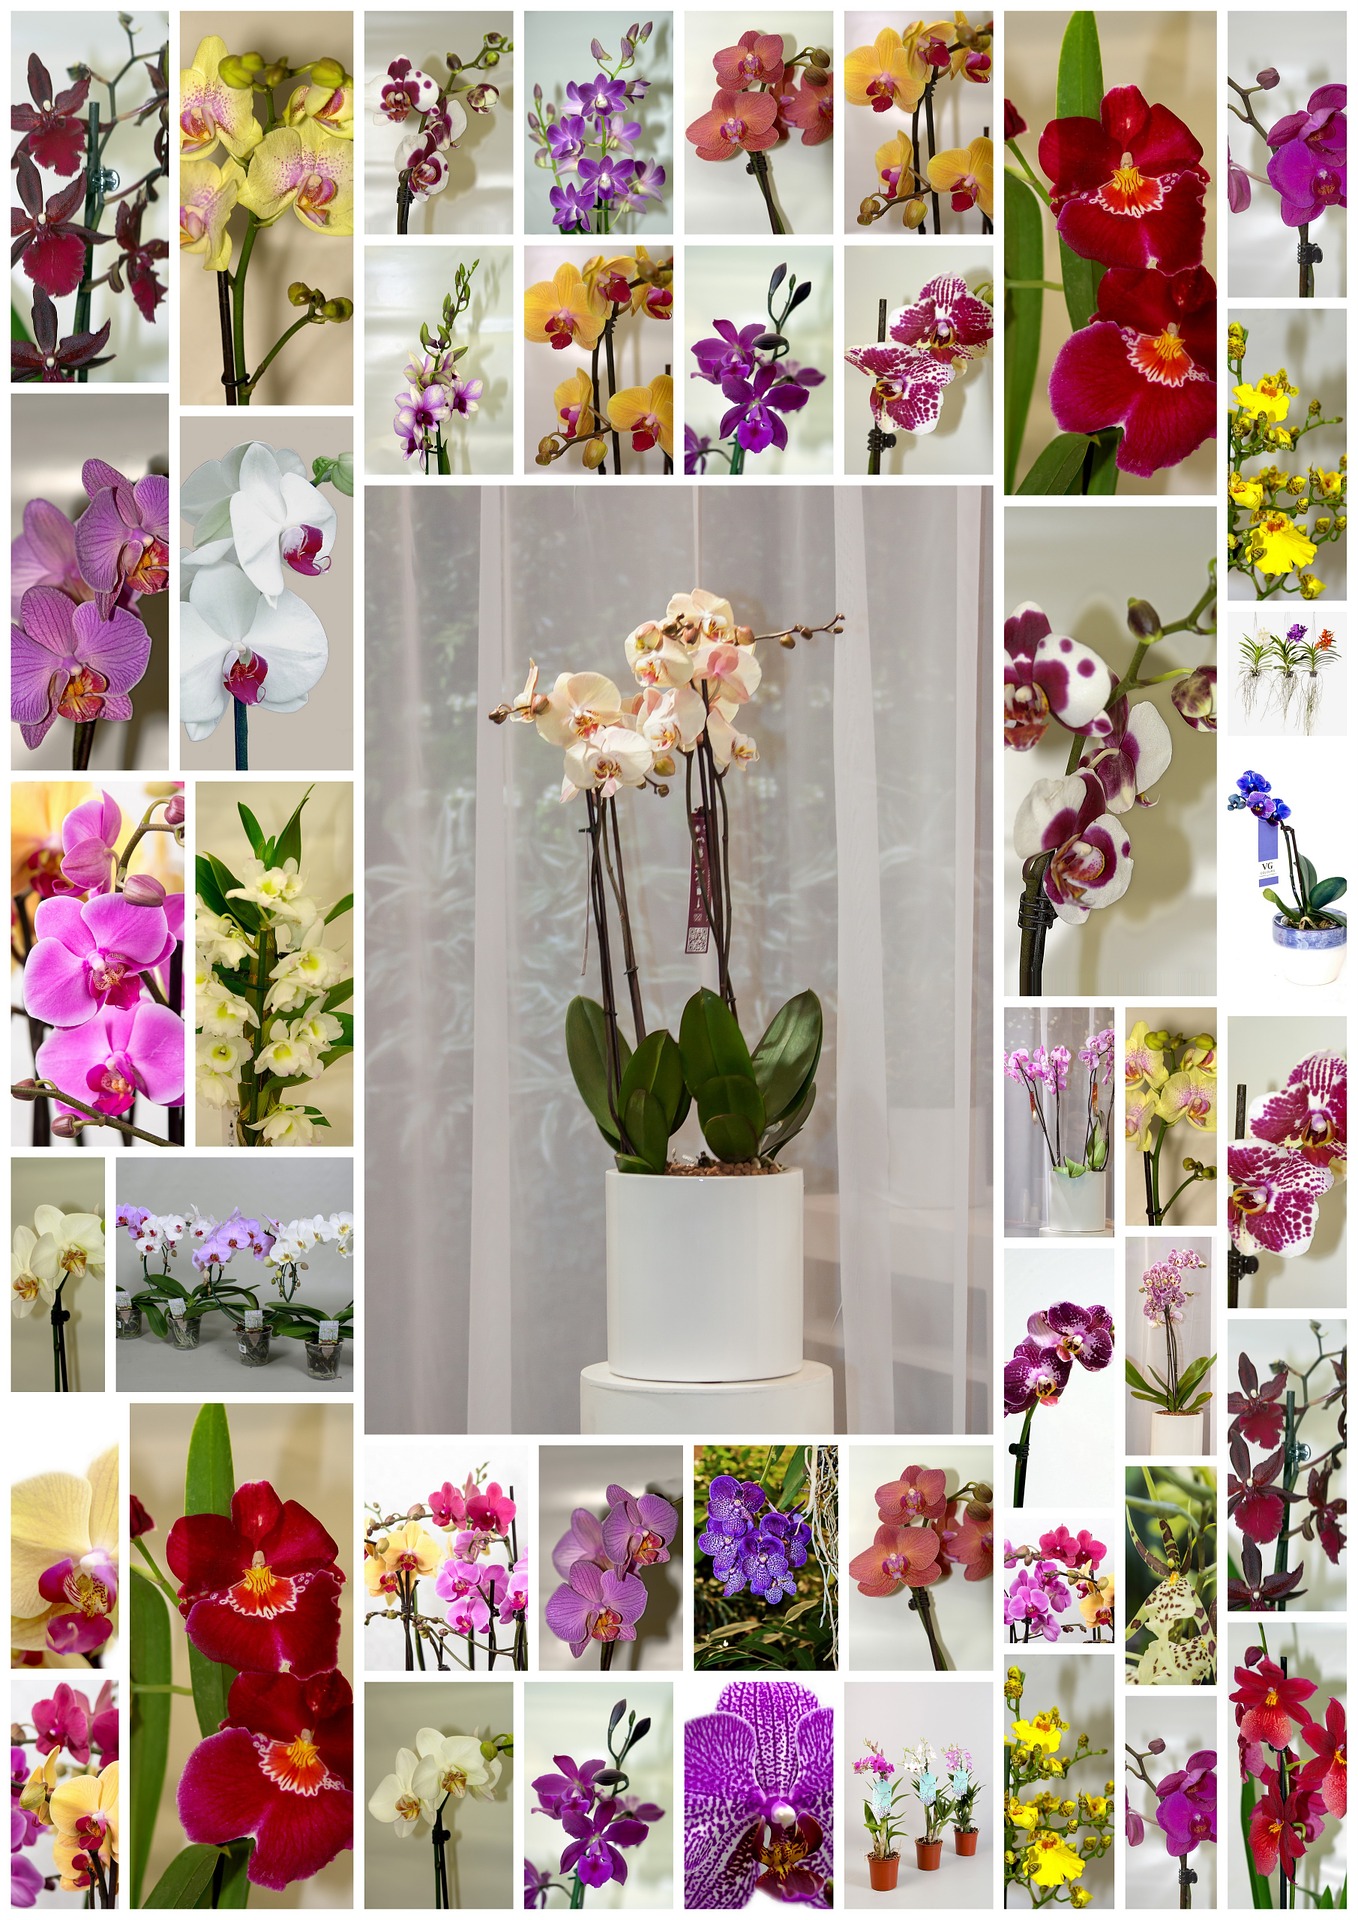 orchids-1130128_1920